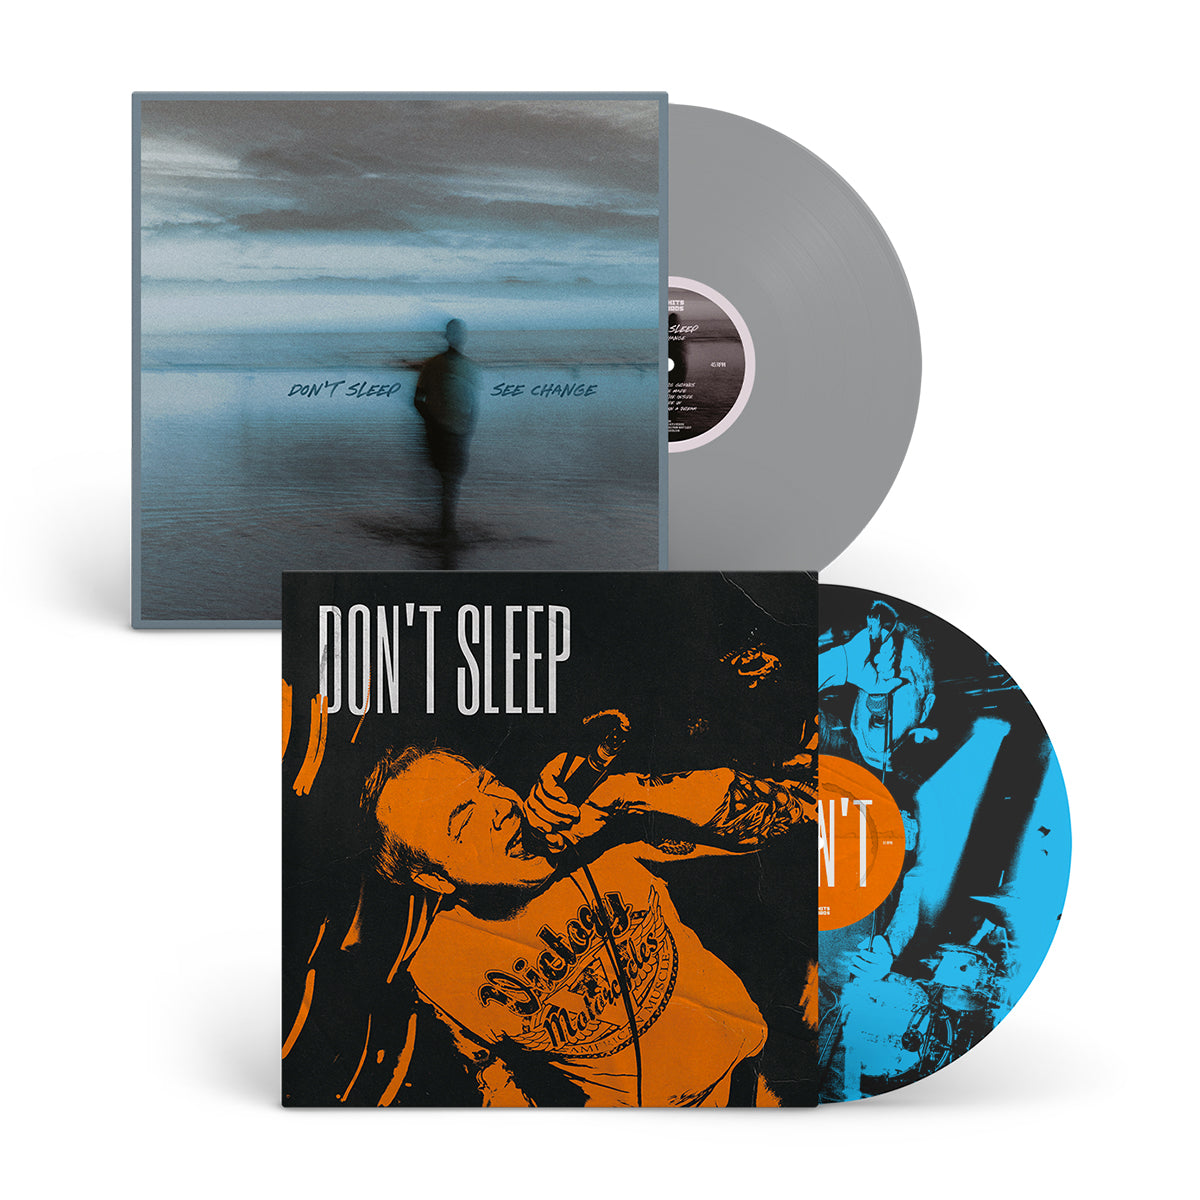 DON'T SLEEP "See Change + S/T" Vinyl Bundle